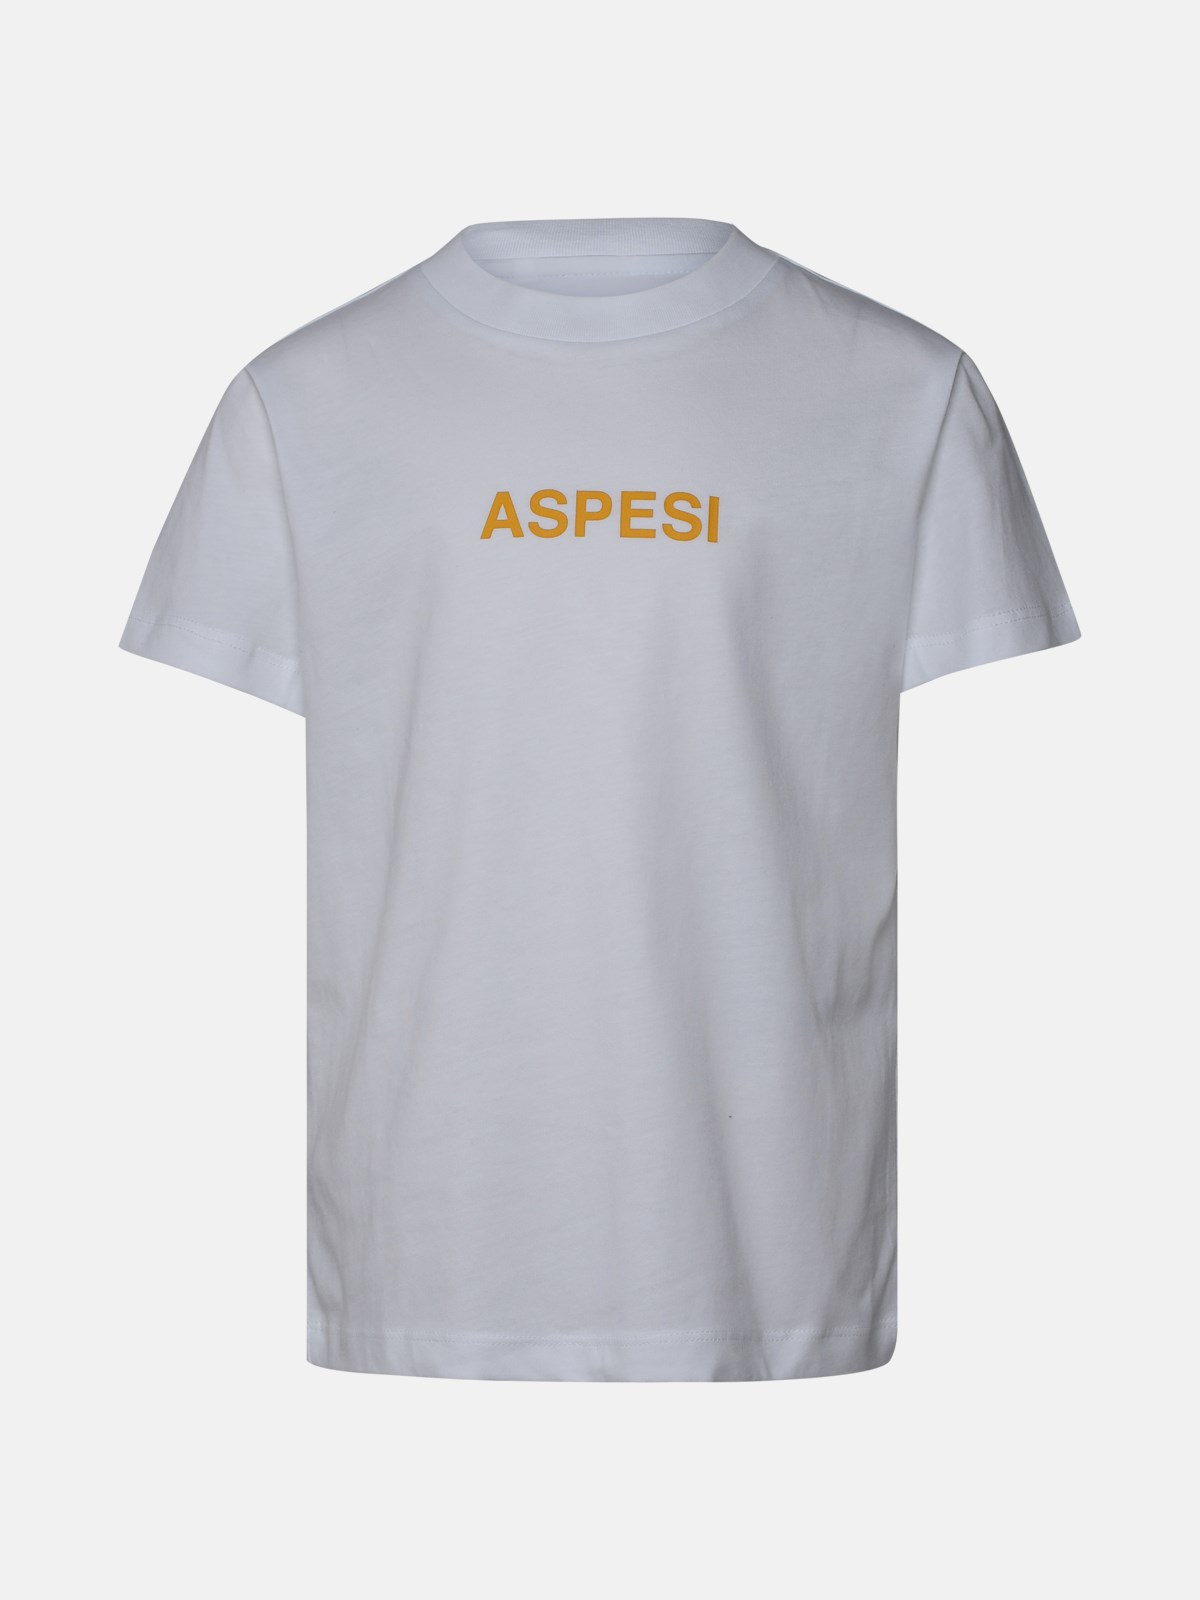 Aspesi T-shirt Logo In White